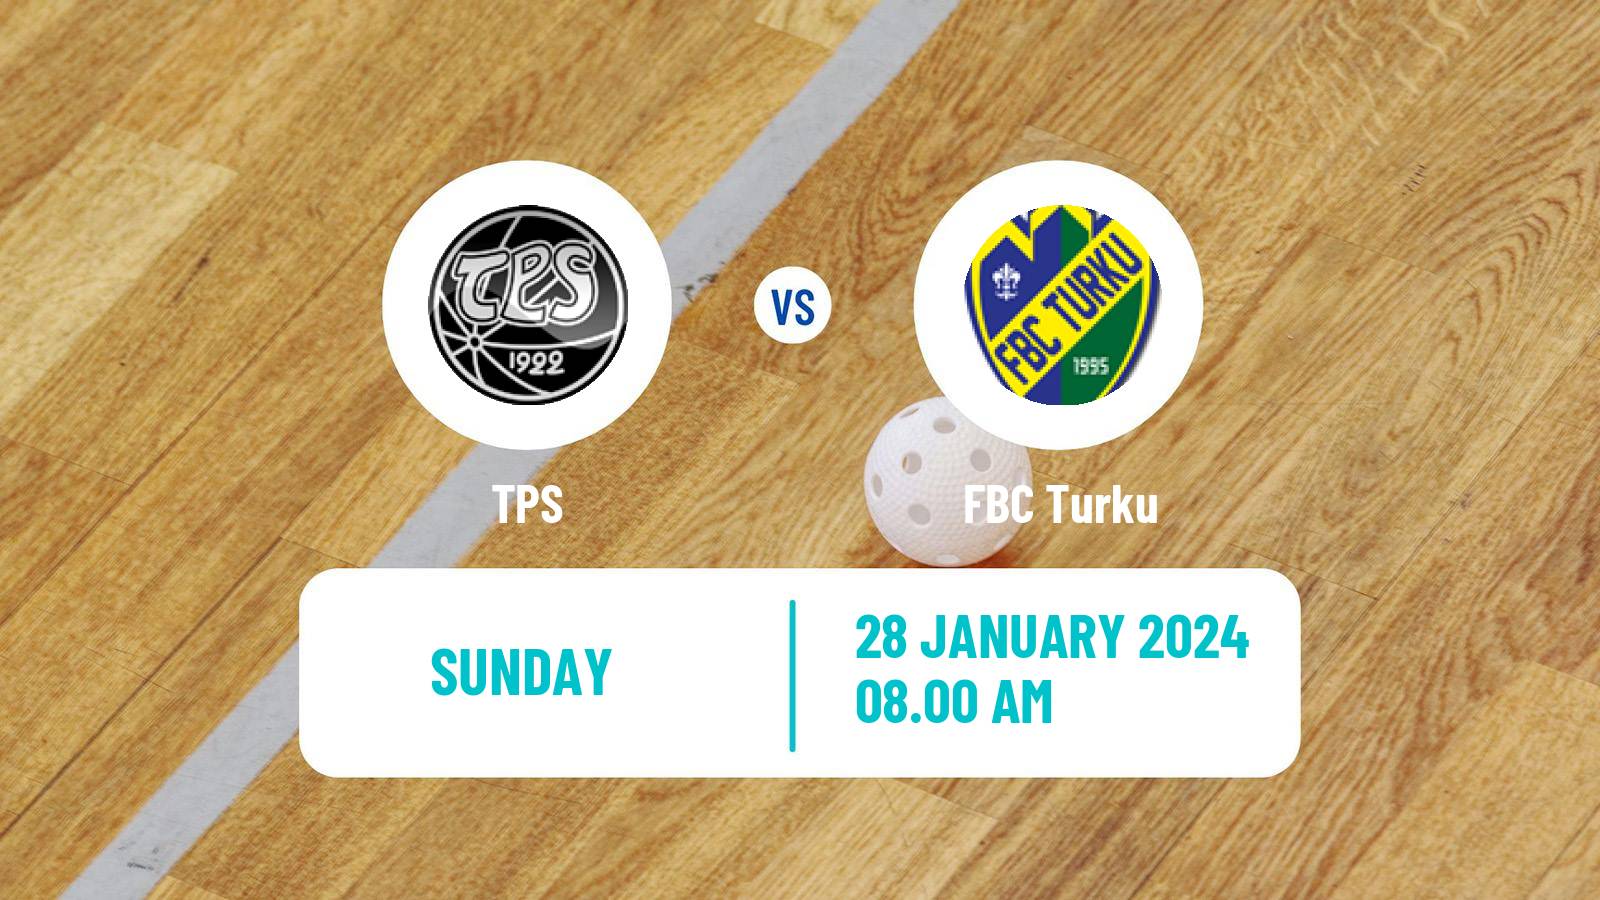 Floorball Finnish F-Liiga TPS - Turku